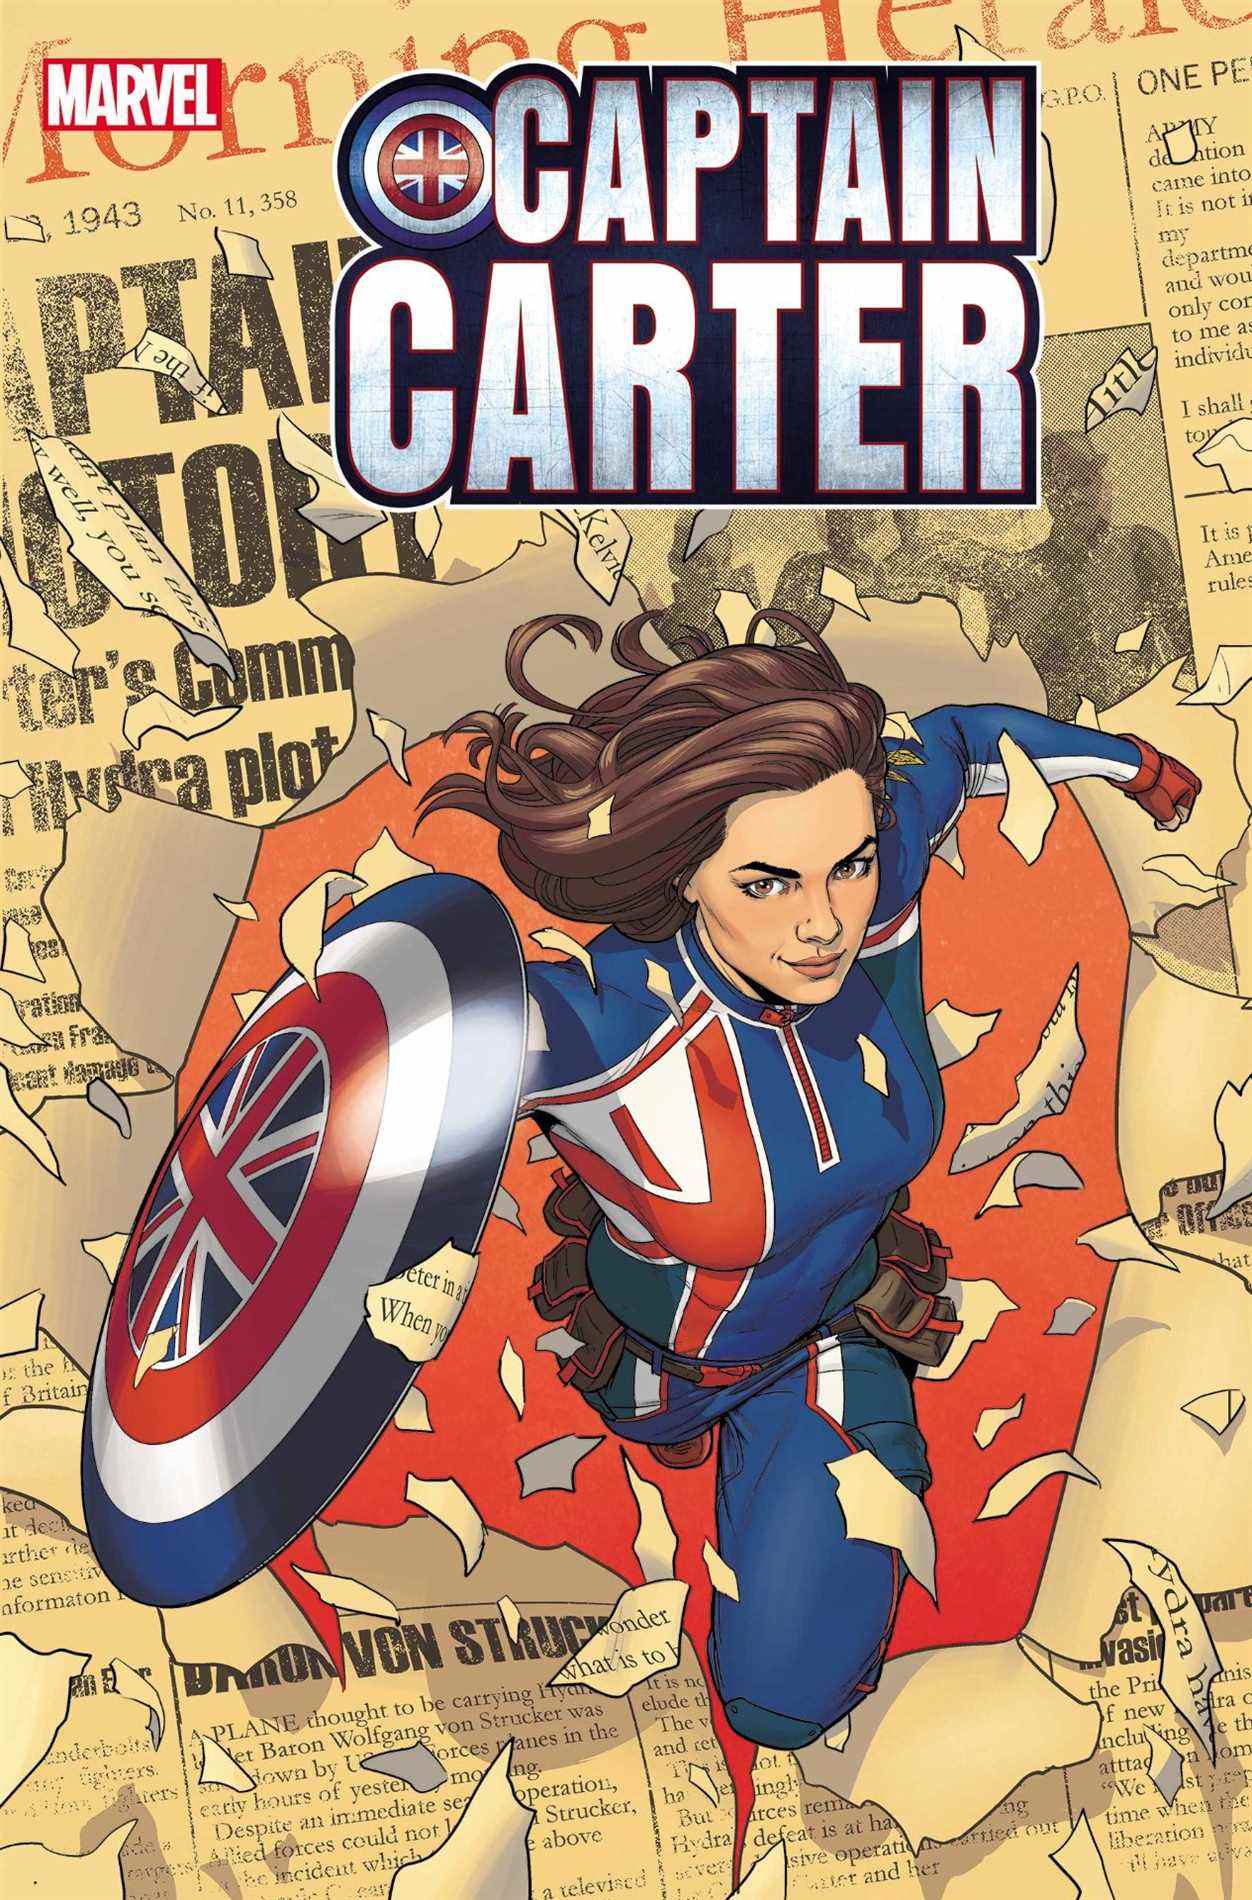 Capitaine Carter #1